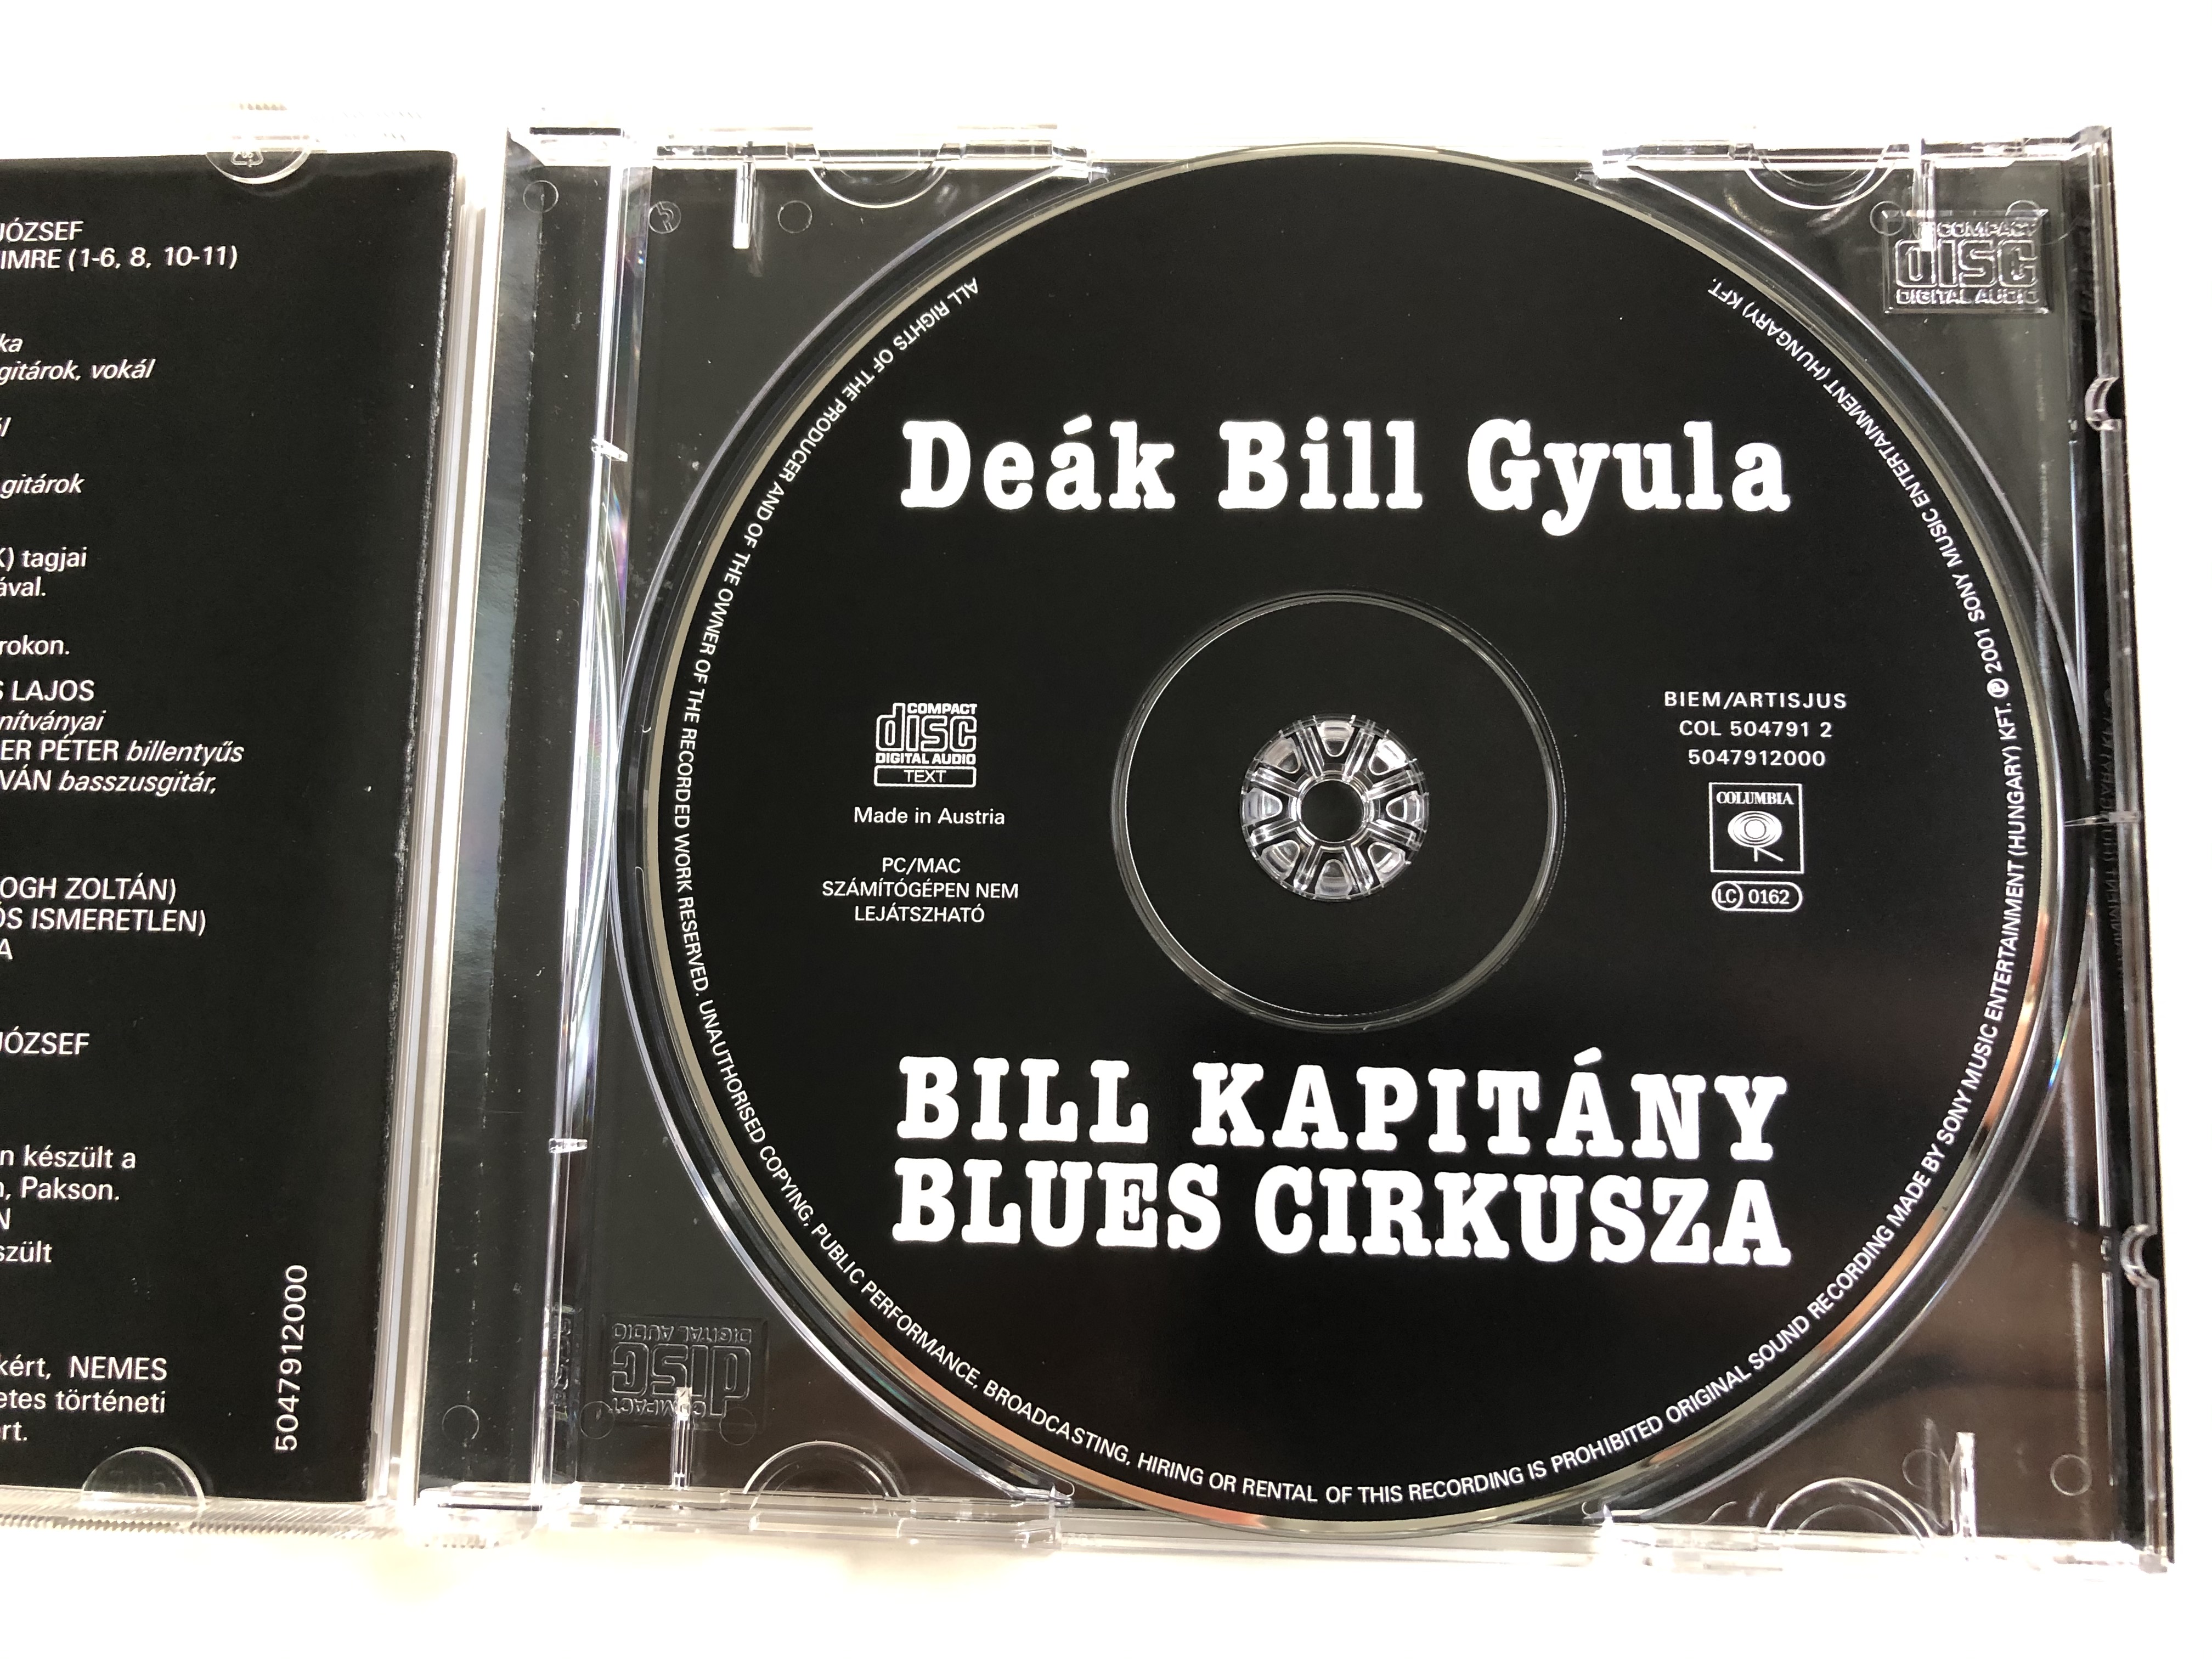 de-k-bill-gyula-bill-kapit-ny-blues-cirkusza-columbia-audio-cd-2001-col-504791-2-4-.jpg